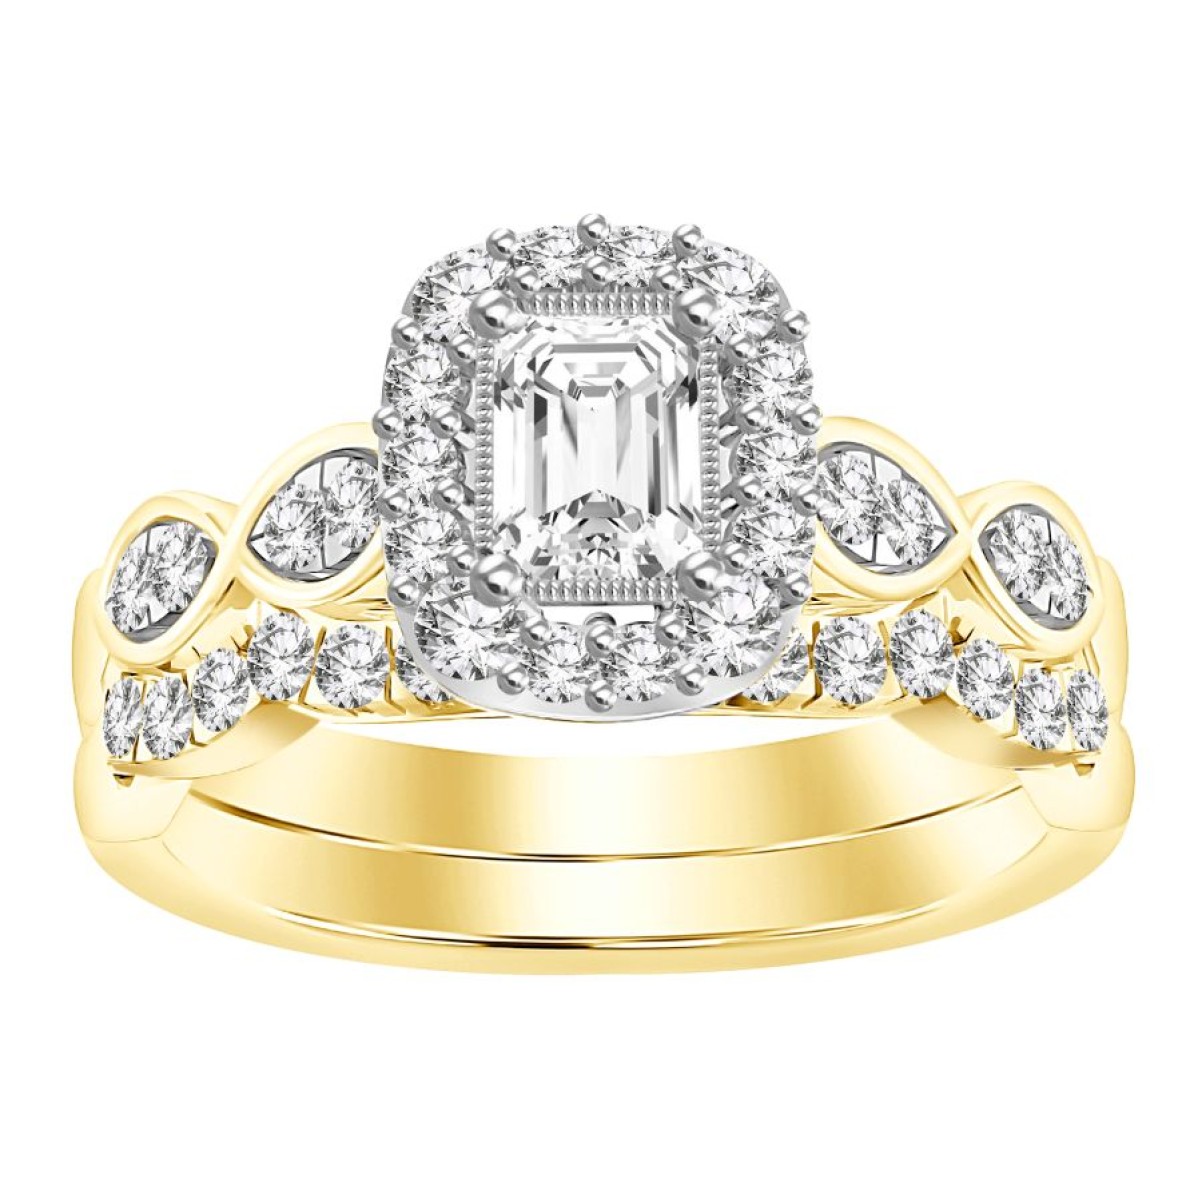 BRIDAL RING SET 1.00CT ROUND/EMERALD DIAMOND 14K YELLOW GOLD